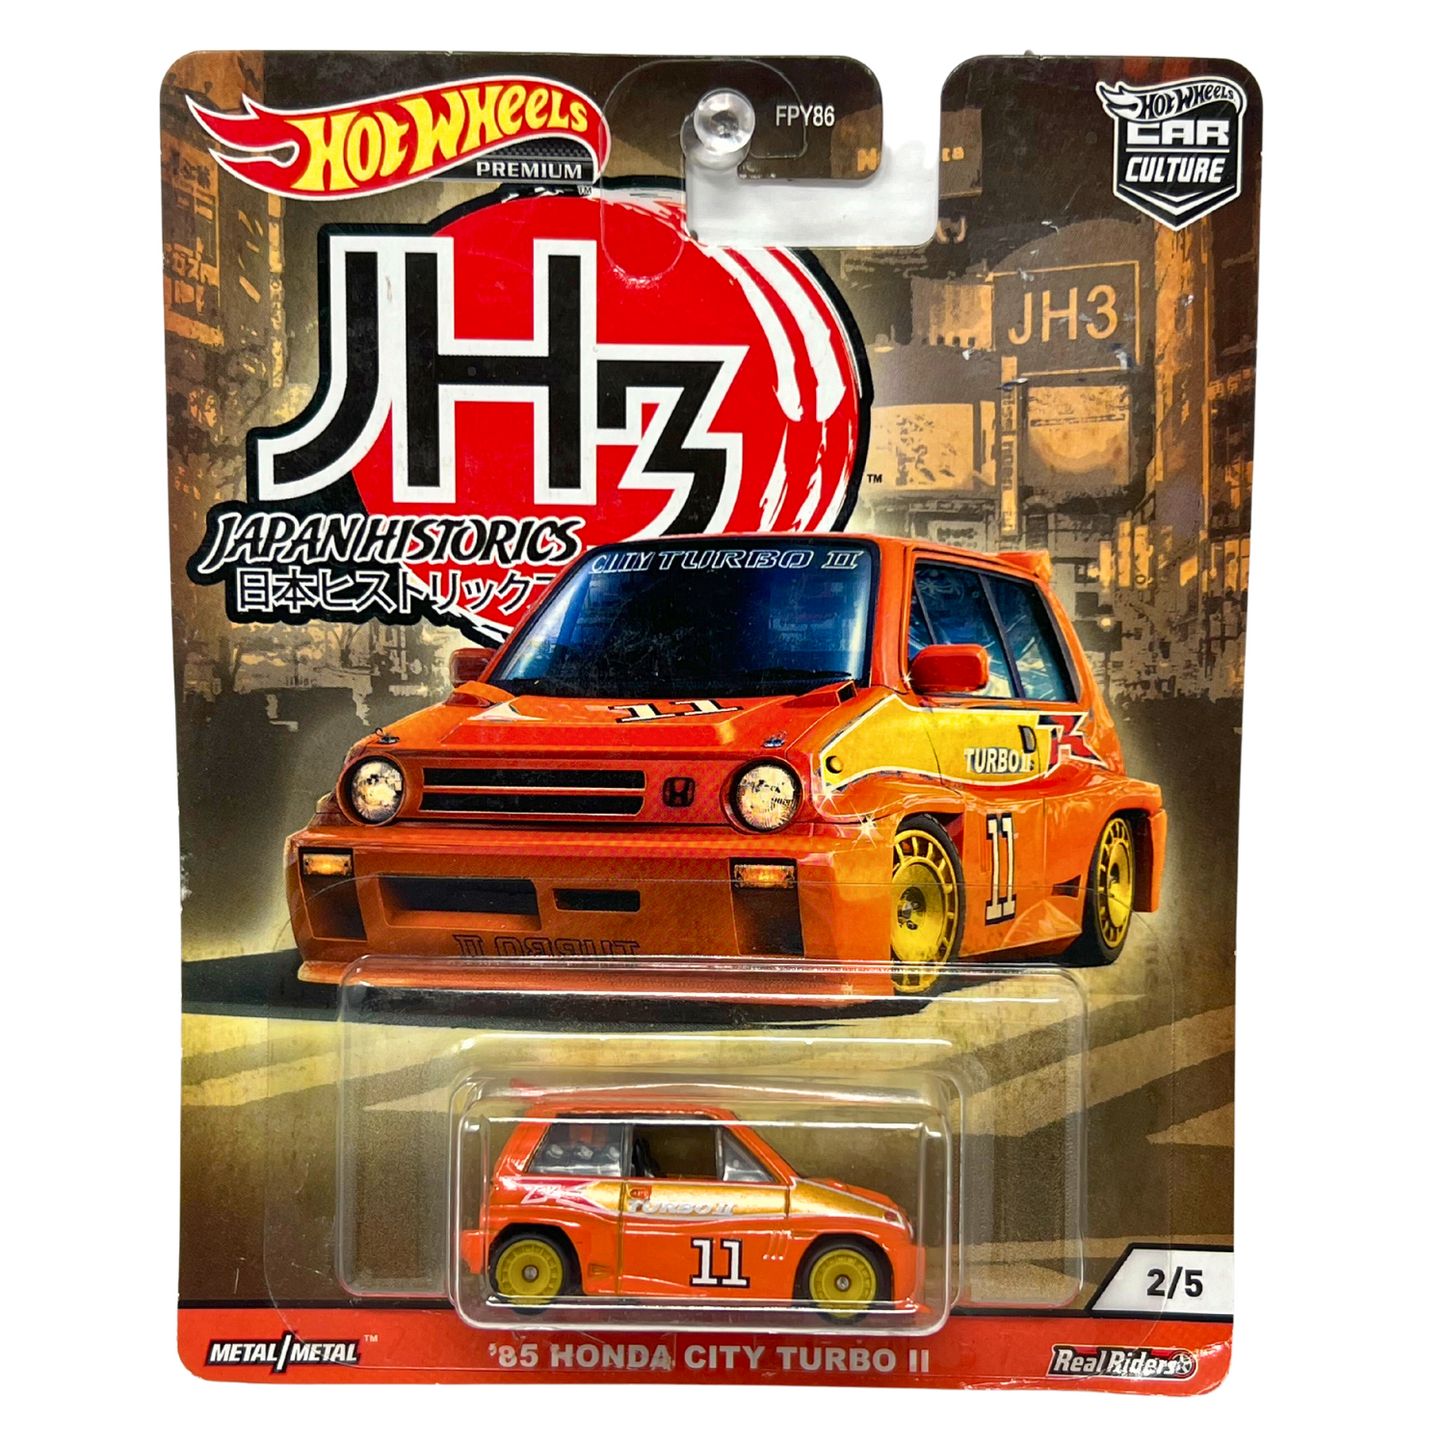 Hot Wheels Premium Japan Historics 3 '85 Honda City Turbo II 1:64 Diecast